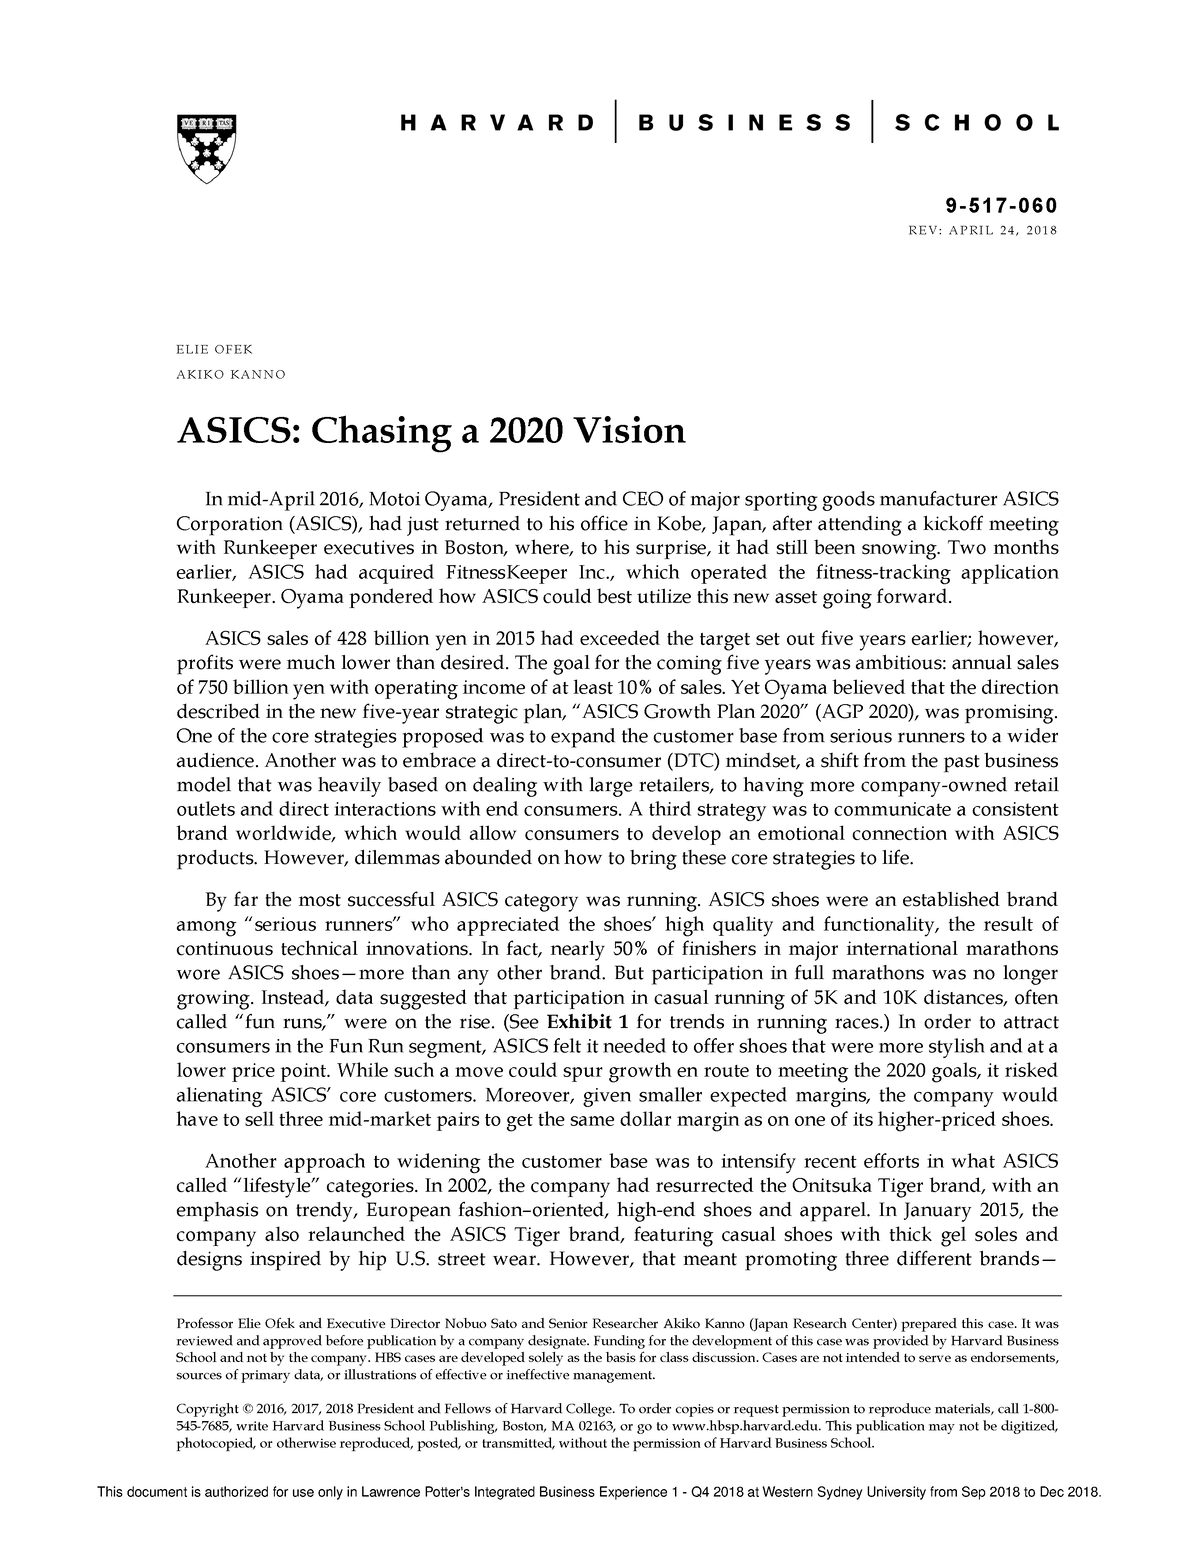 Asics-Chasing a 2020 Vision - ####### 9 5 1 7 - 0 6 R E V : A P R I L 4 2 0 1 8 Professor - Studocu